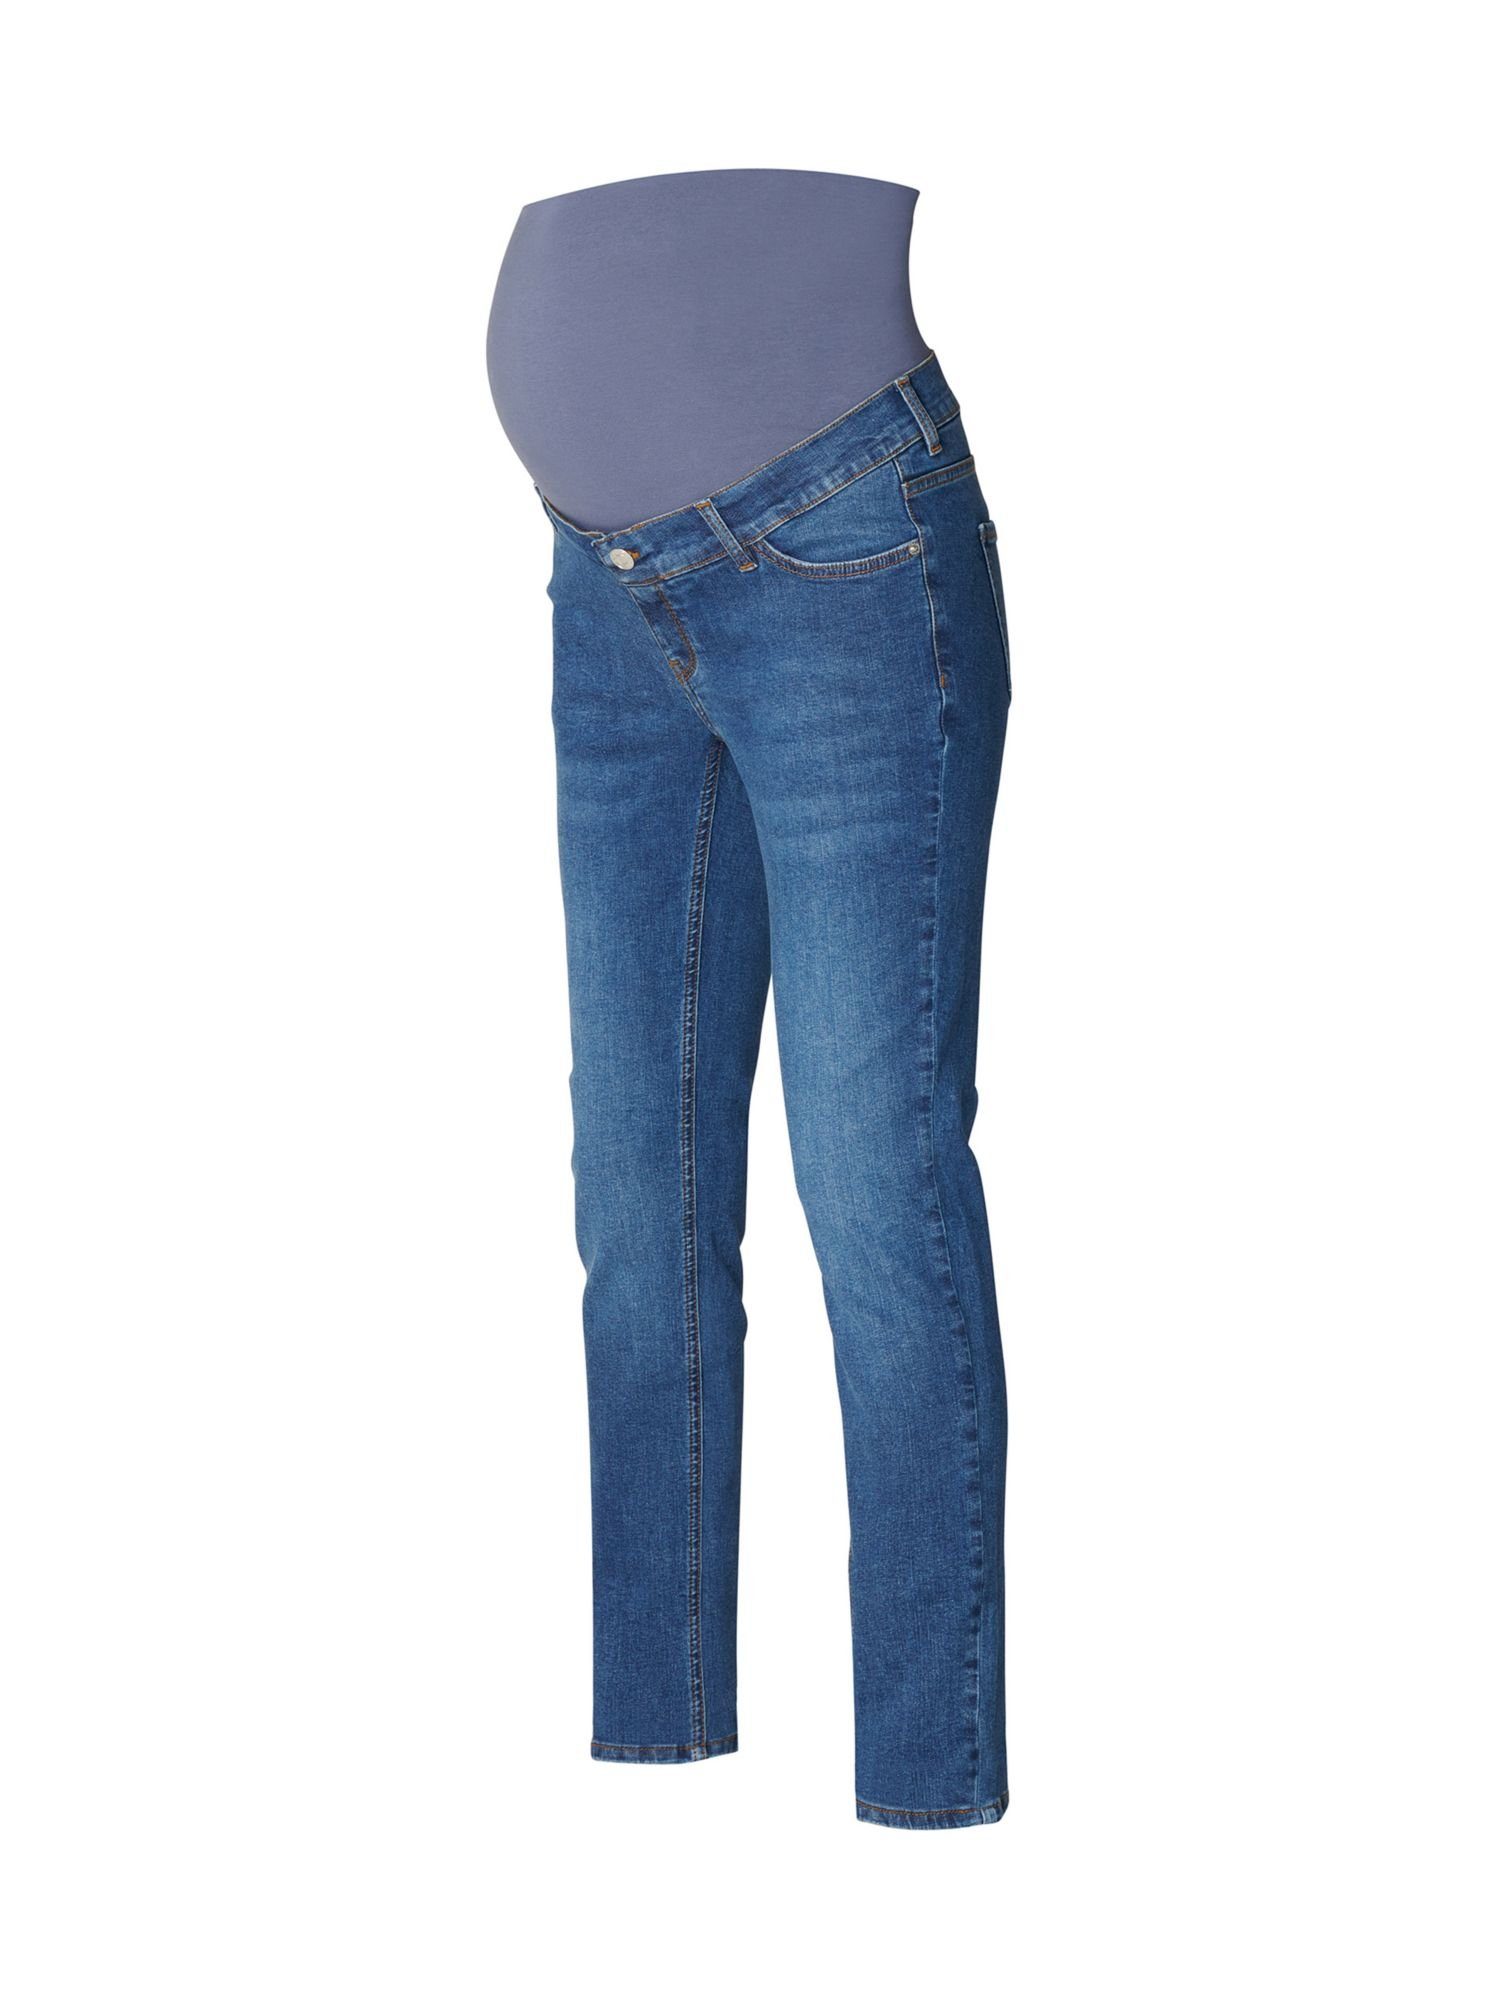 Esprit Umstands Jeans 34-36 short Bootcut blau Hose NEU Maternity NEU 79,95€ 